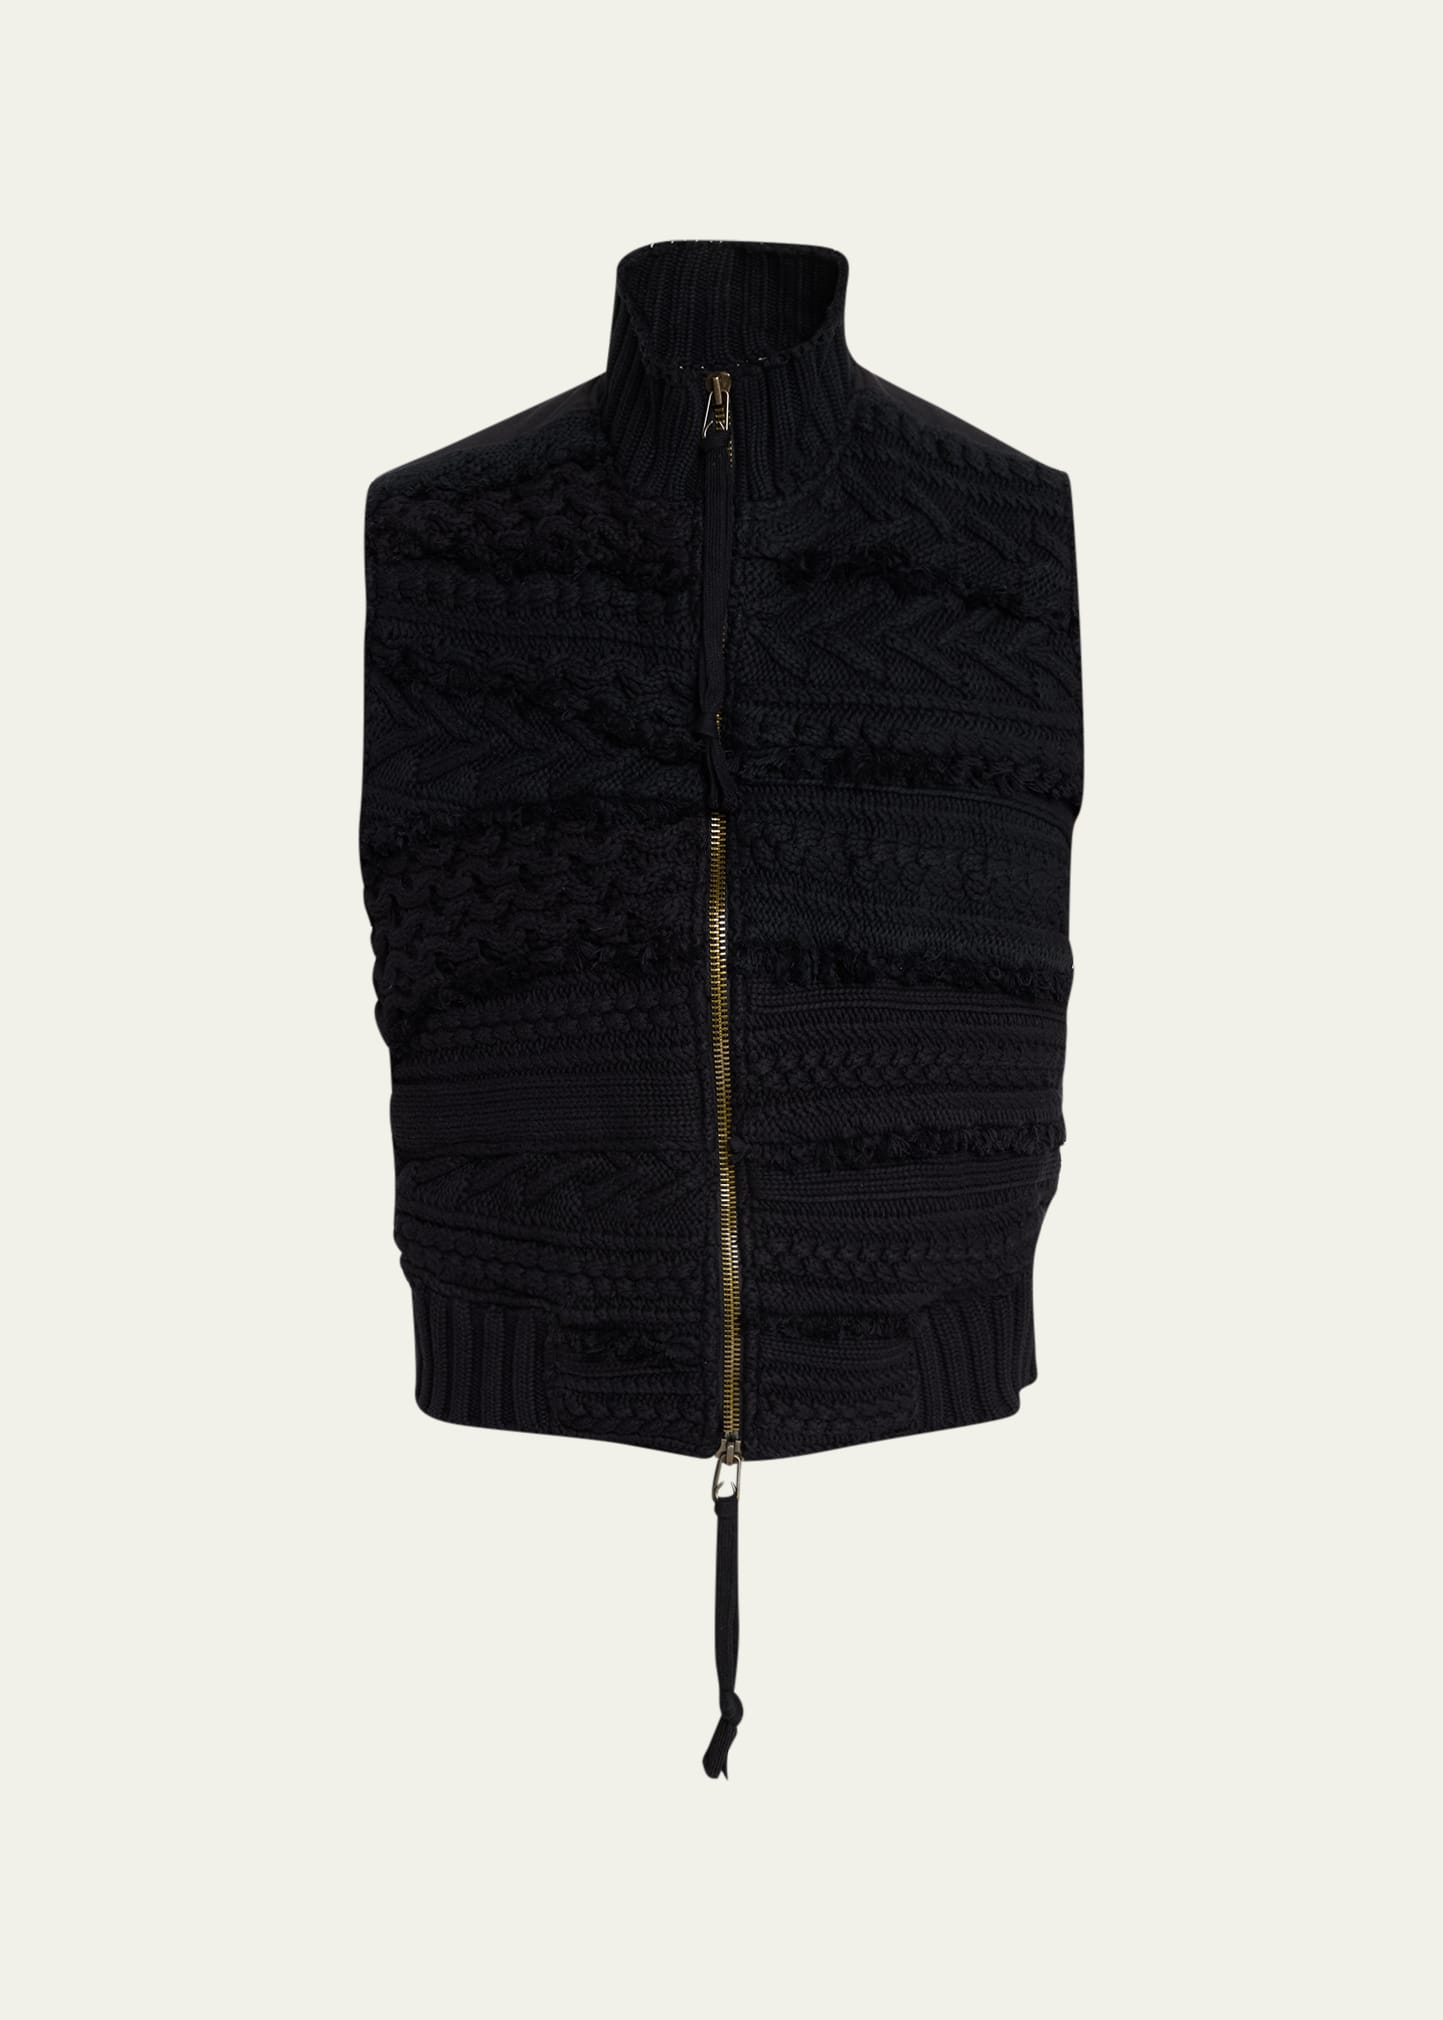 Greg Lauren Men's Fisherman Knit Sweater Vest In Black